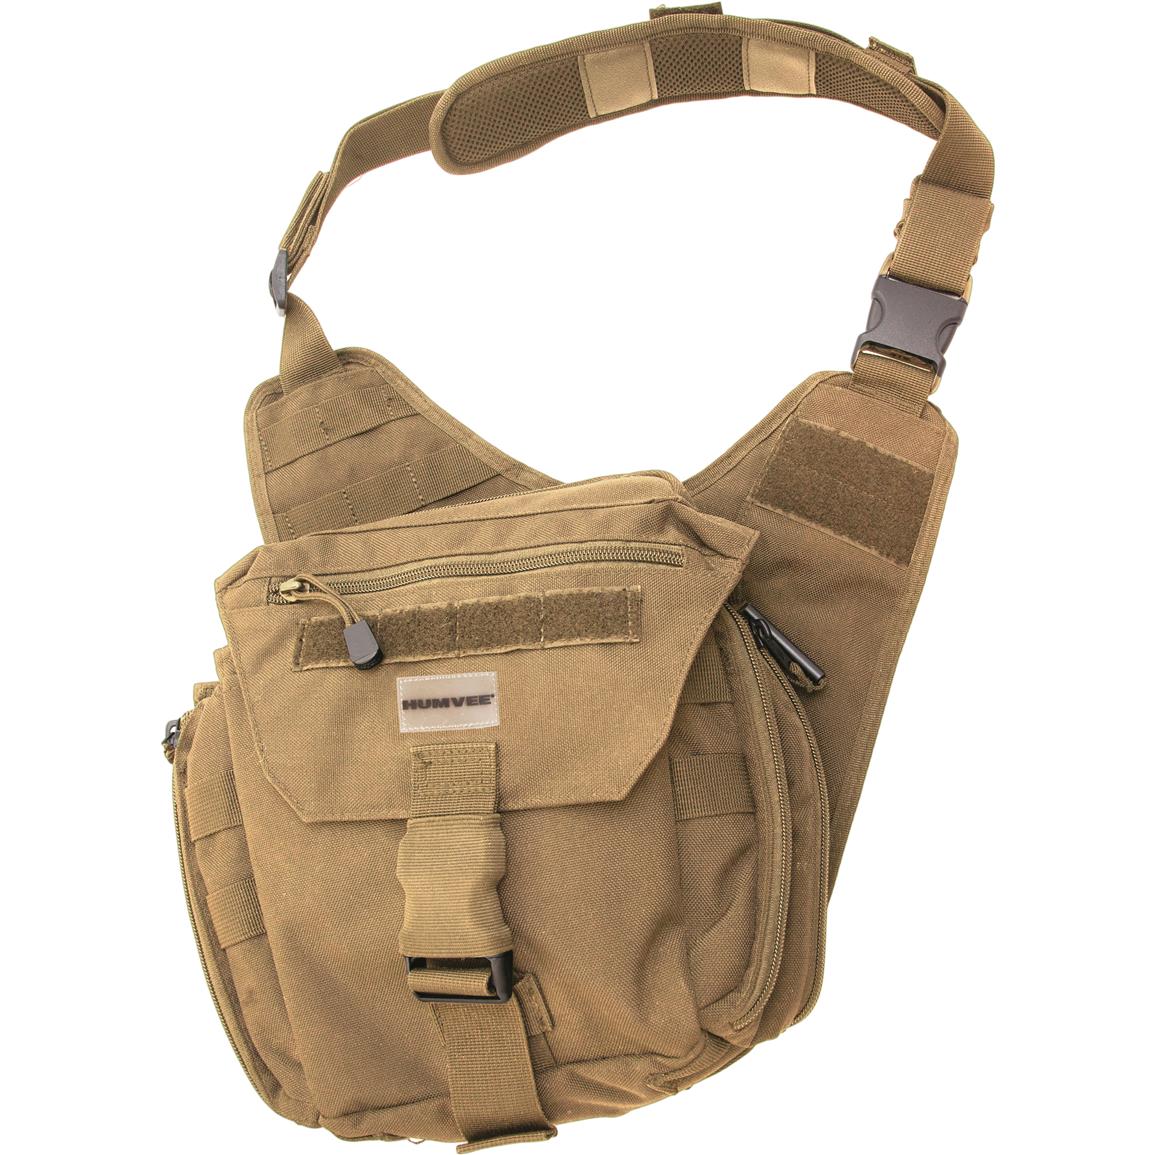 Humble Shoulder Bag - 675973, Military Style Backpacks & Bags at ...